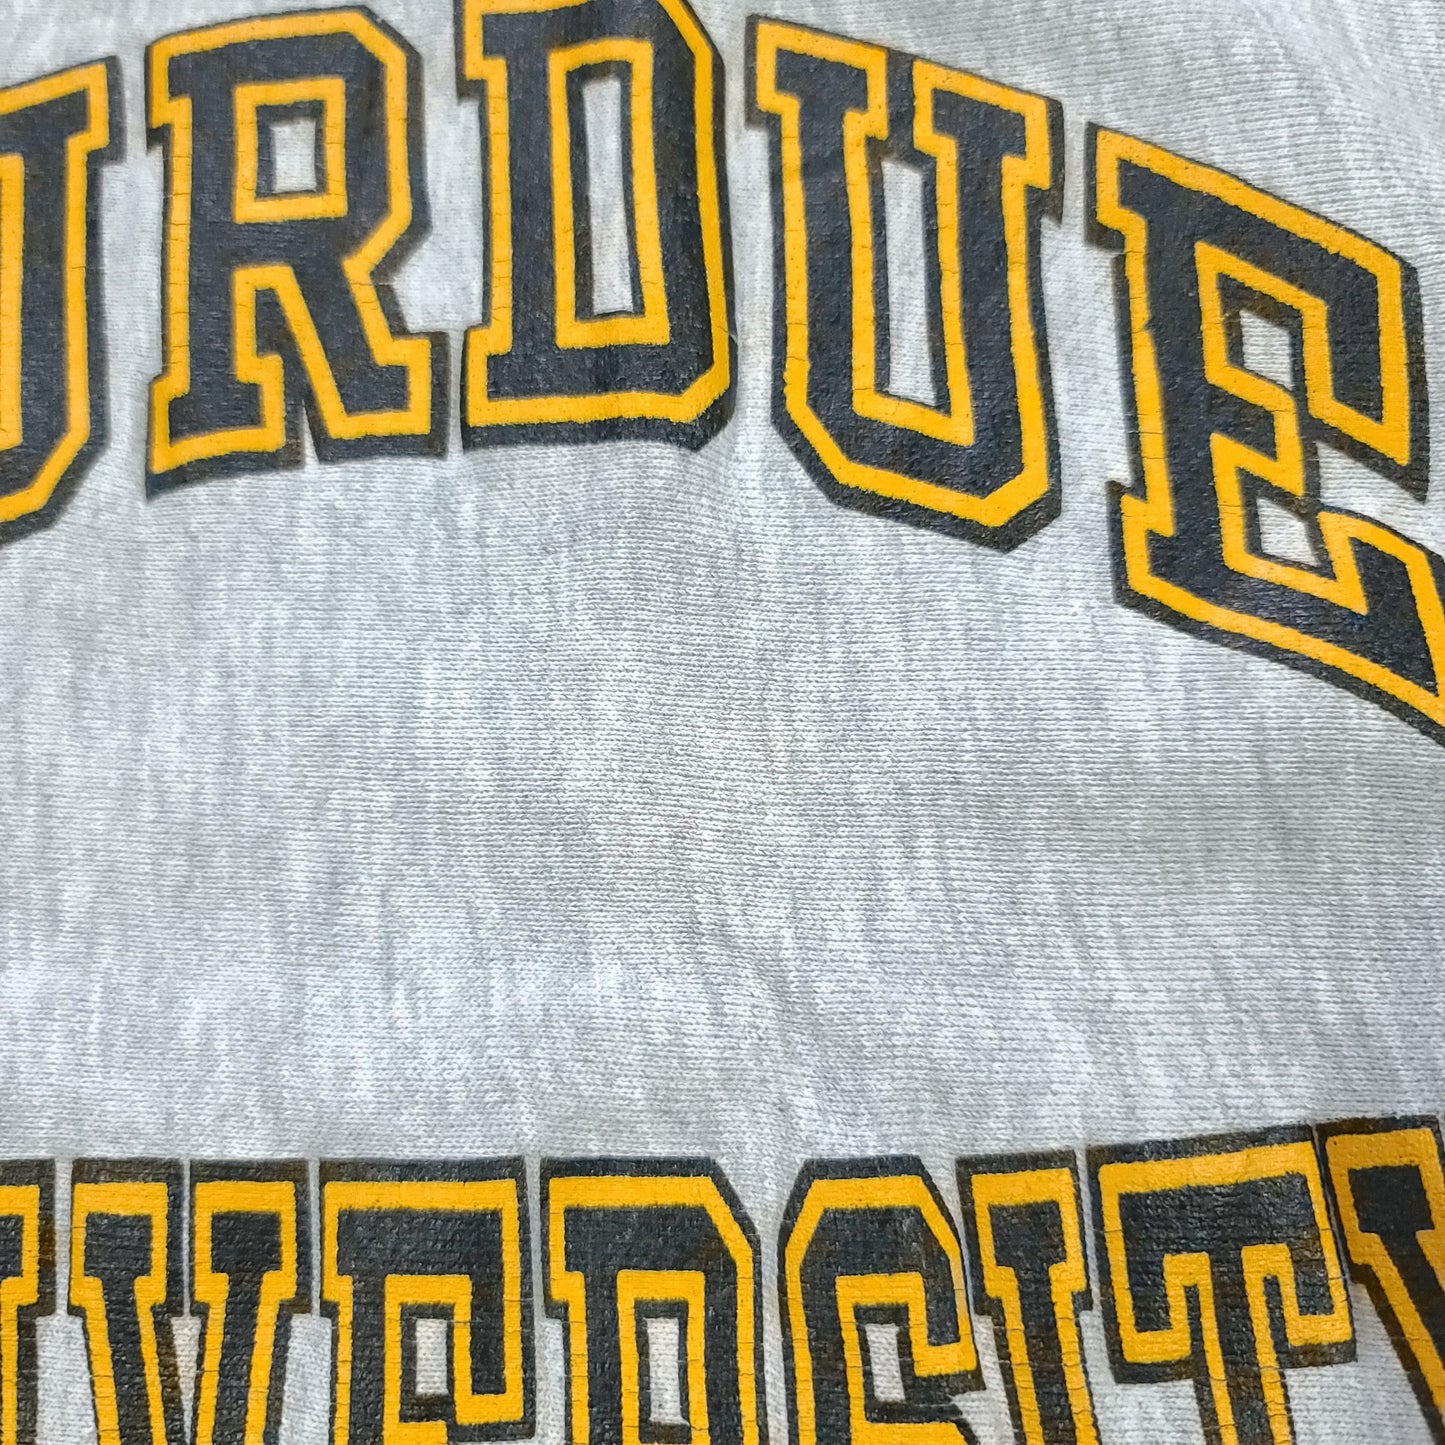 Vintage Purdue University Champion Reverse Weave Sweatshirt